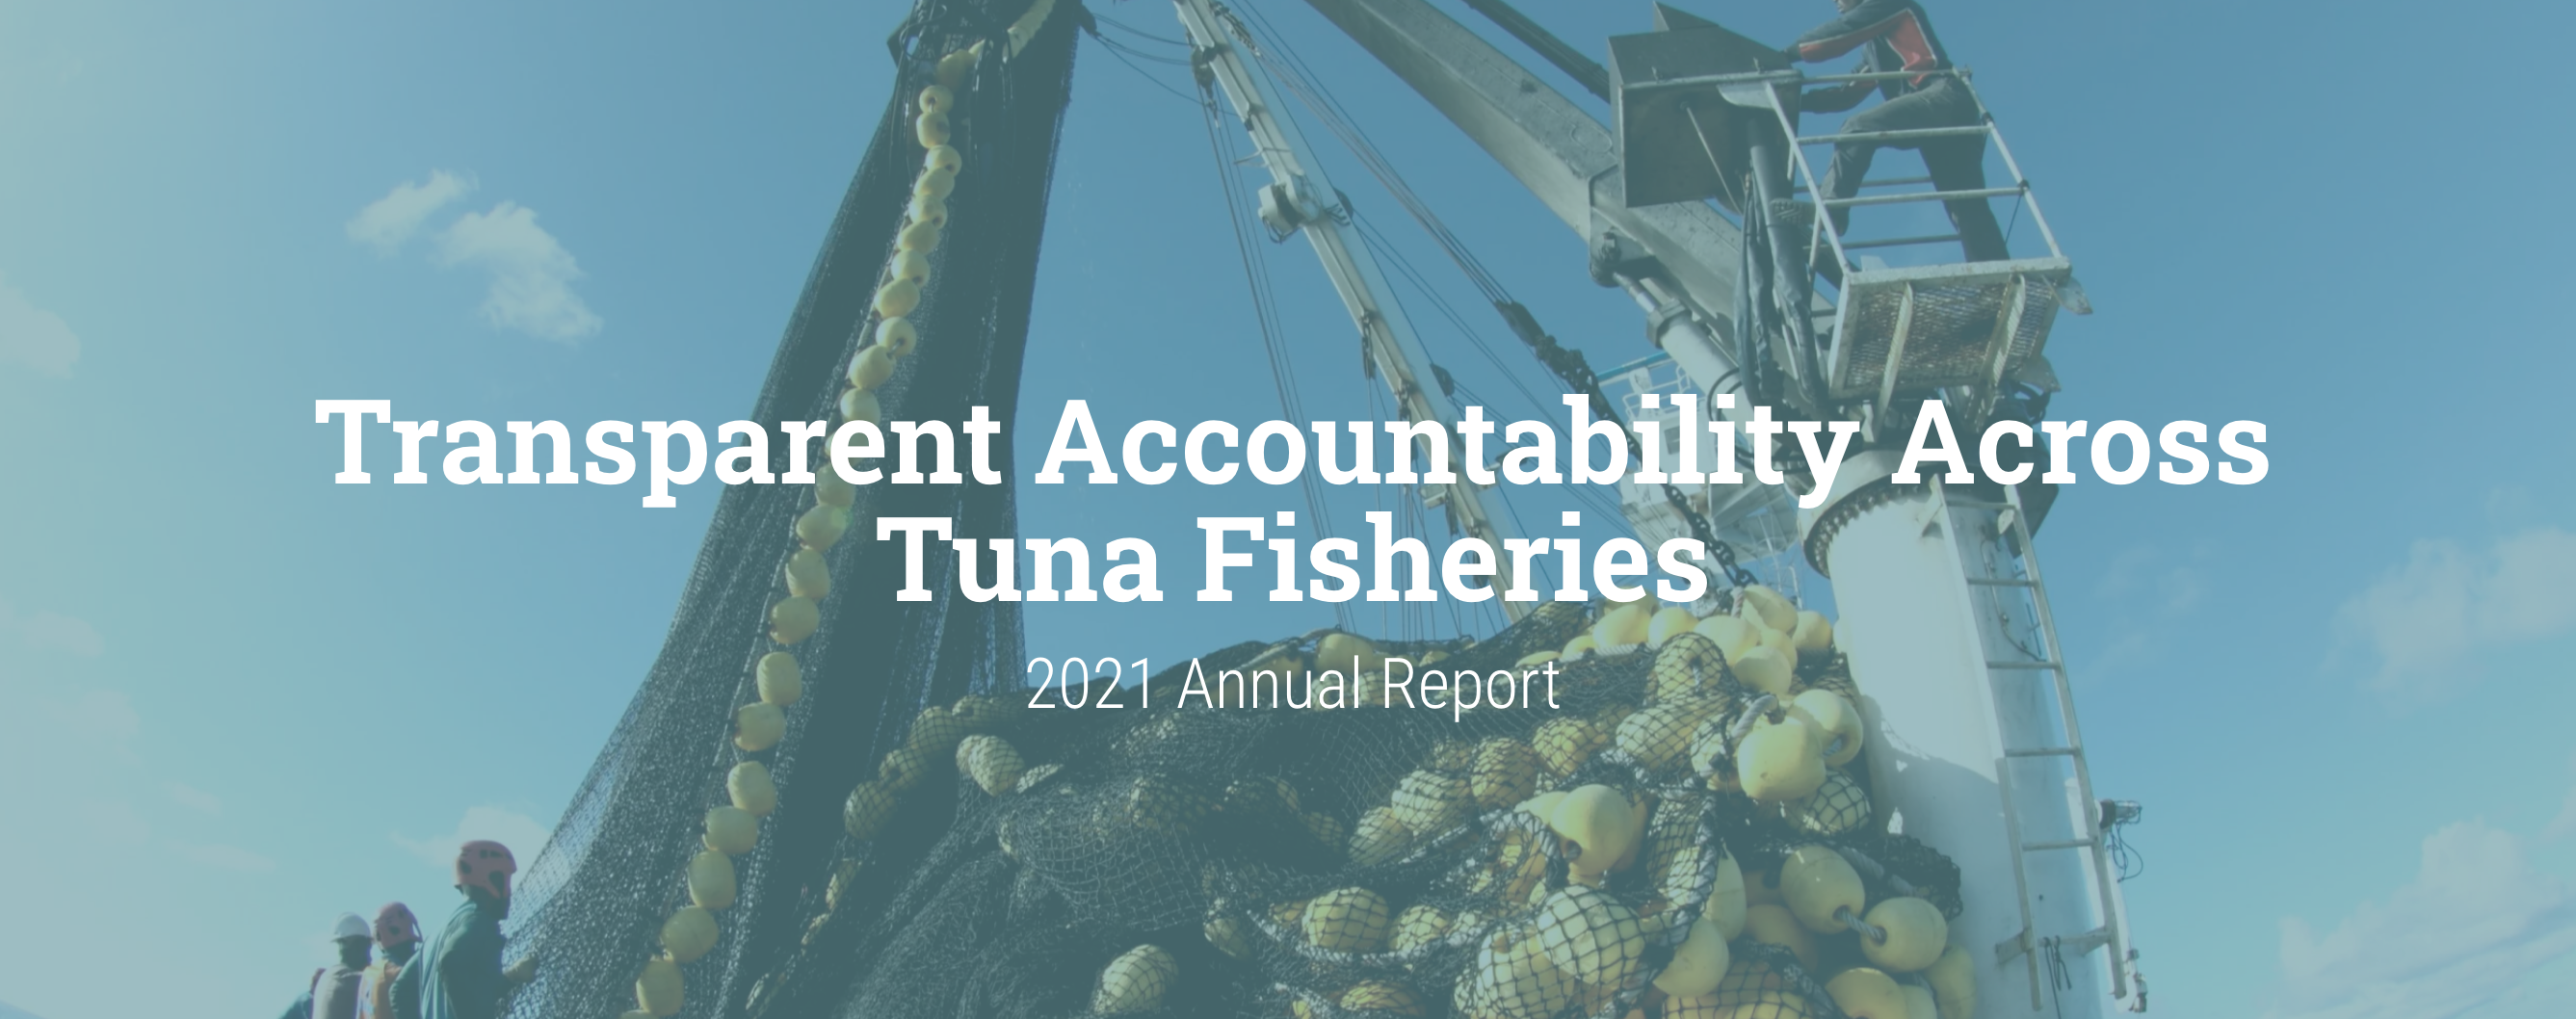 Transparent Accountability Across Tuna Fisheries